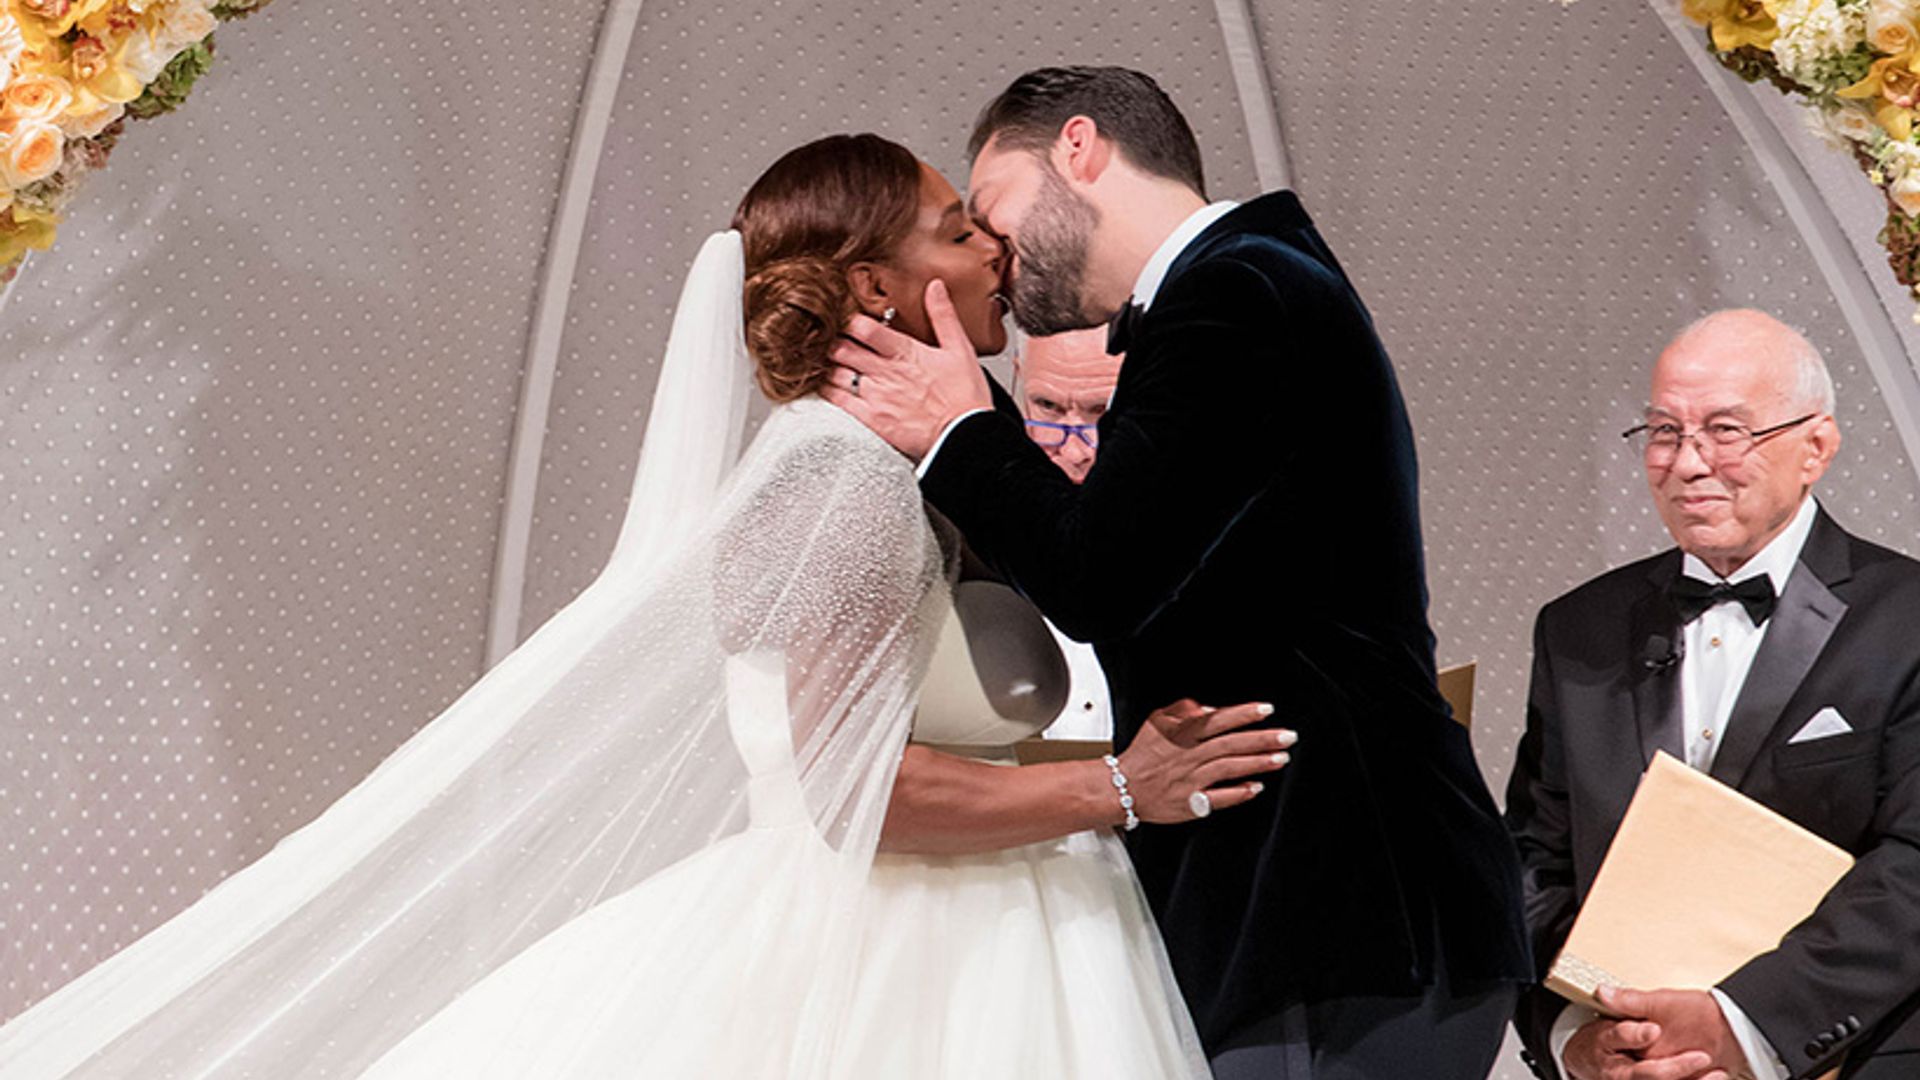 Serena Williams Crashes a Wedding!